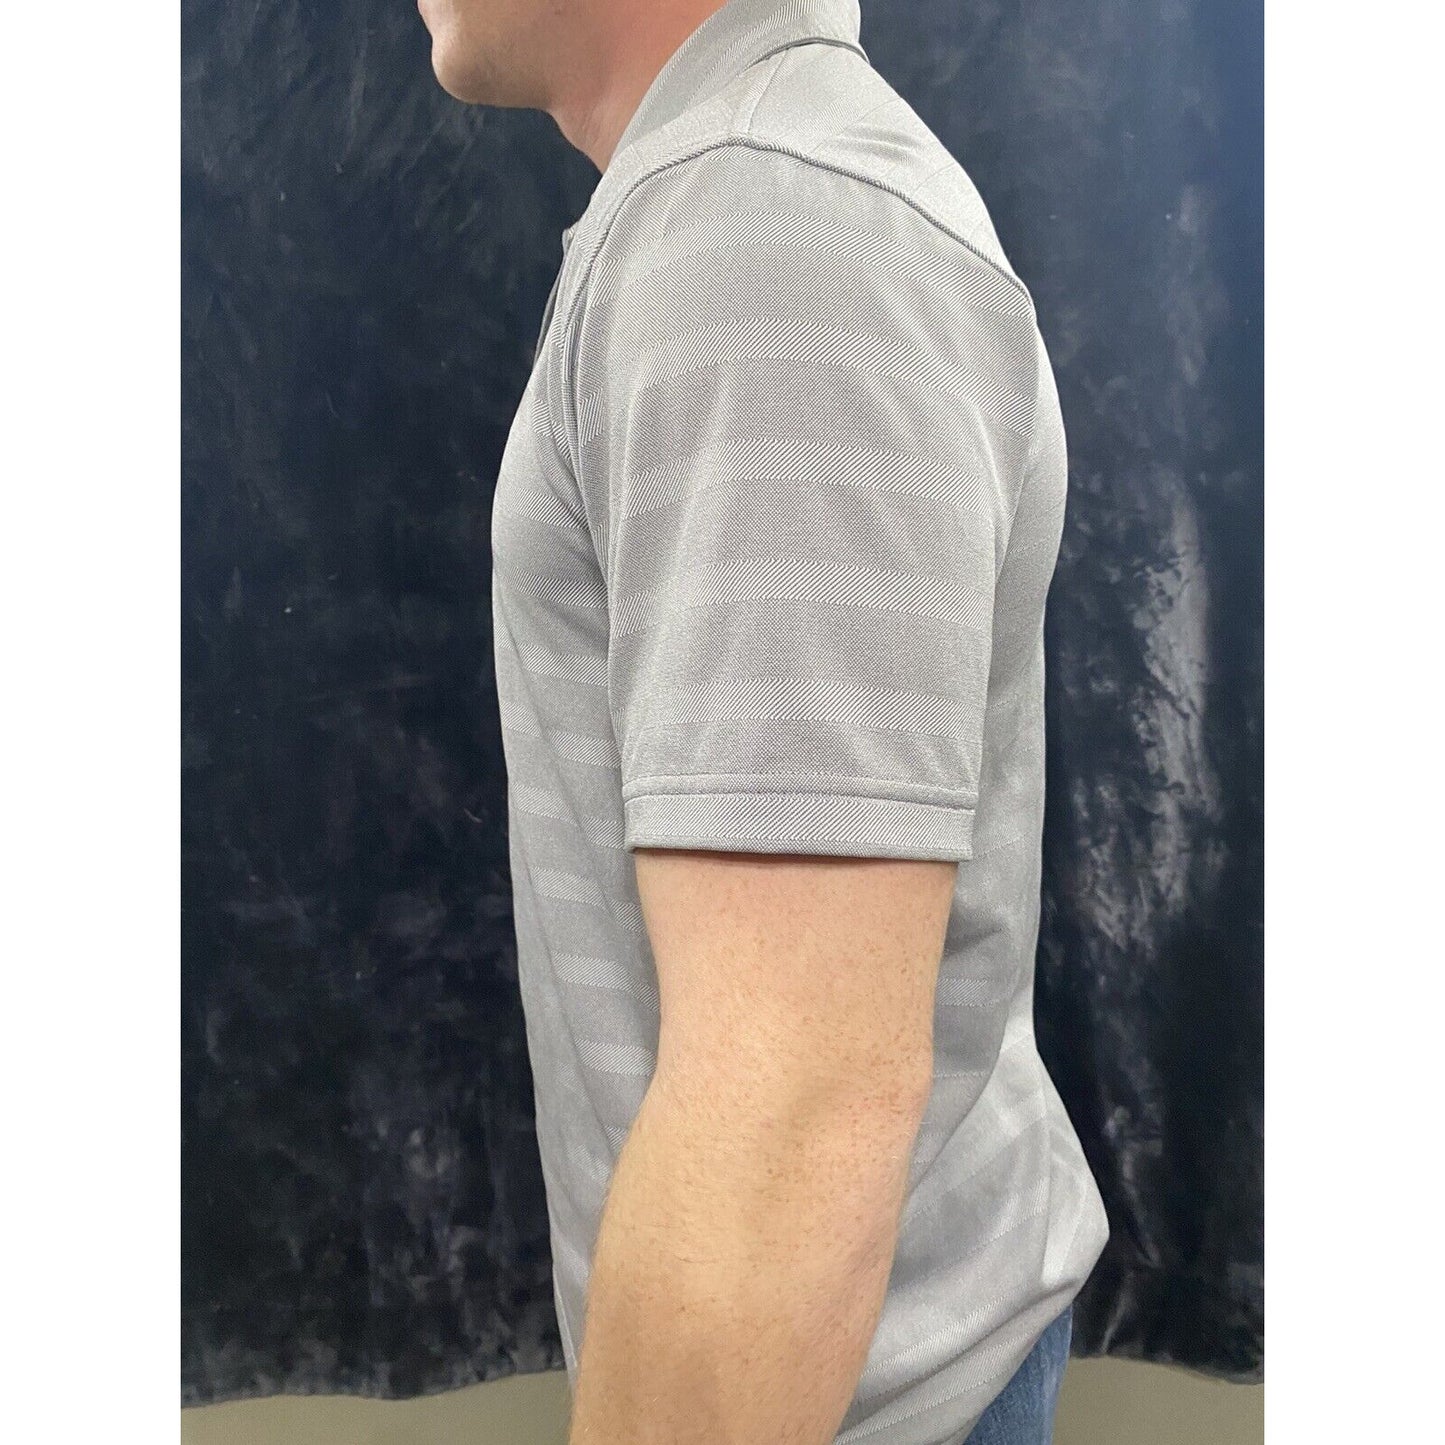 Bolle Men's Short Sleeve Performance Polo Shirt Tornado Stripes Gray Size Medium